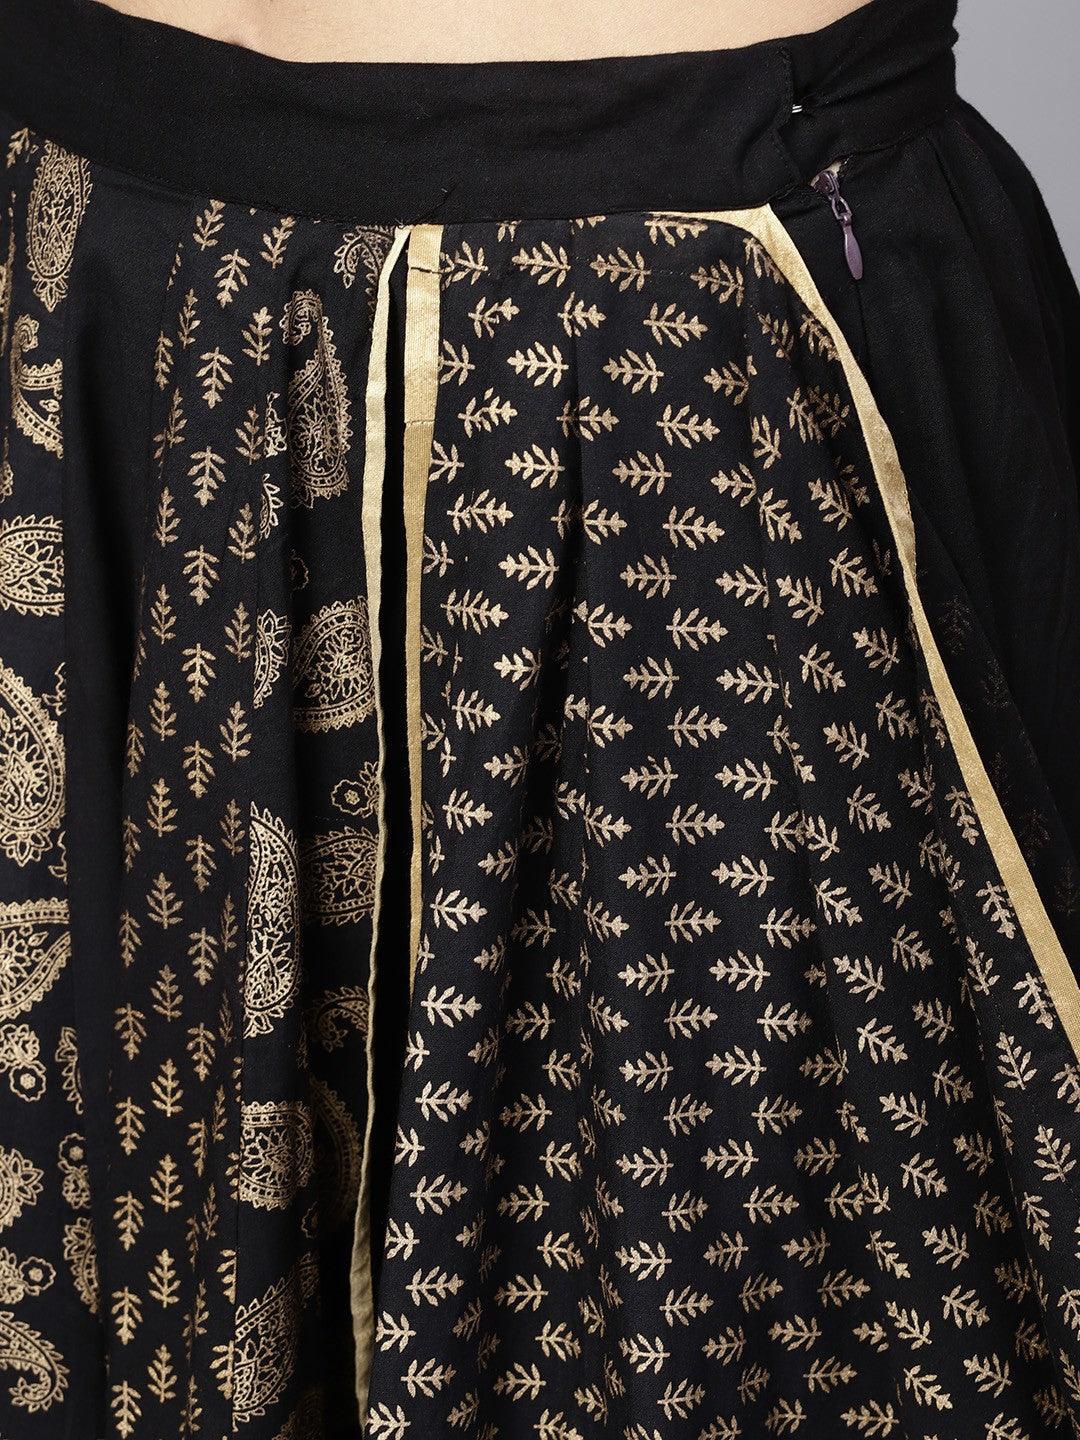 Black Gold Printed Lehenga With Choli And Dupatta (Fully Stitched) - Znxclothing